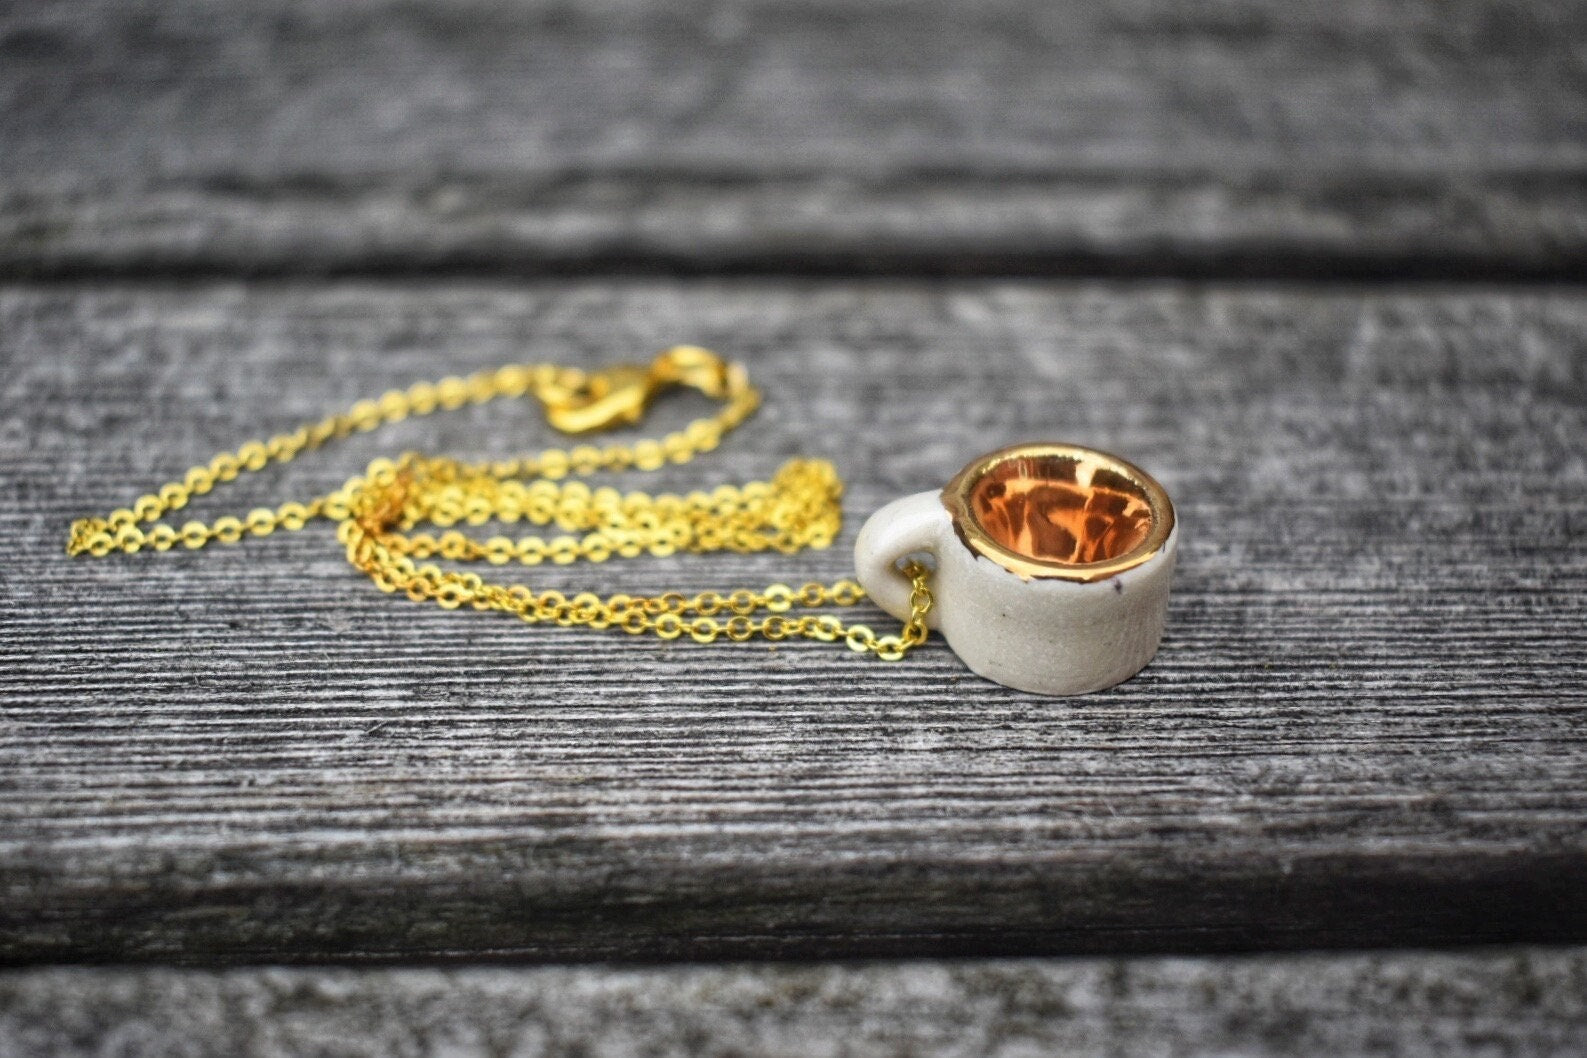 Micro Mug Necklace, White & Gold Mini Pottery Teacup Pendant, unique gift, miniature ceramic jewelry/jewellery, wheel-thrown stoneware